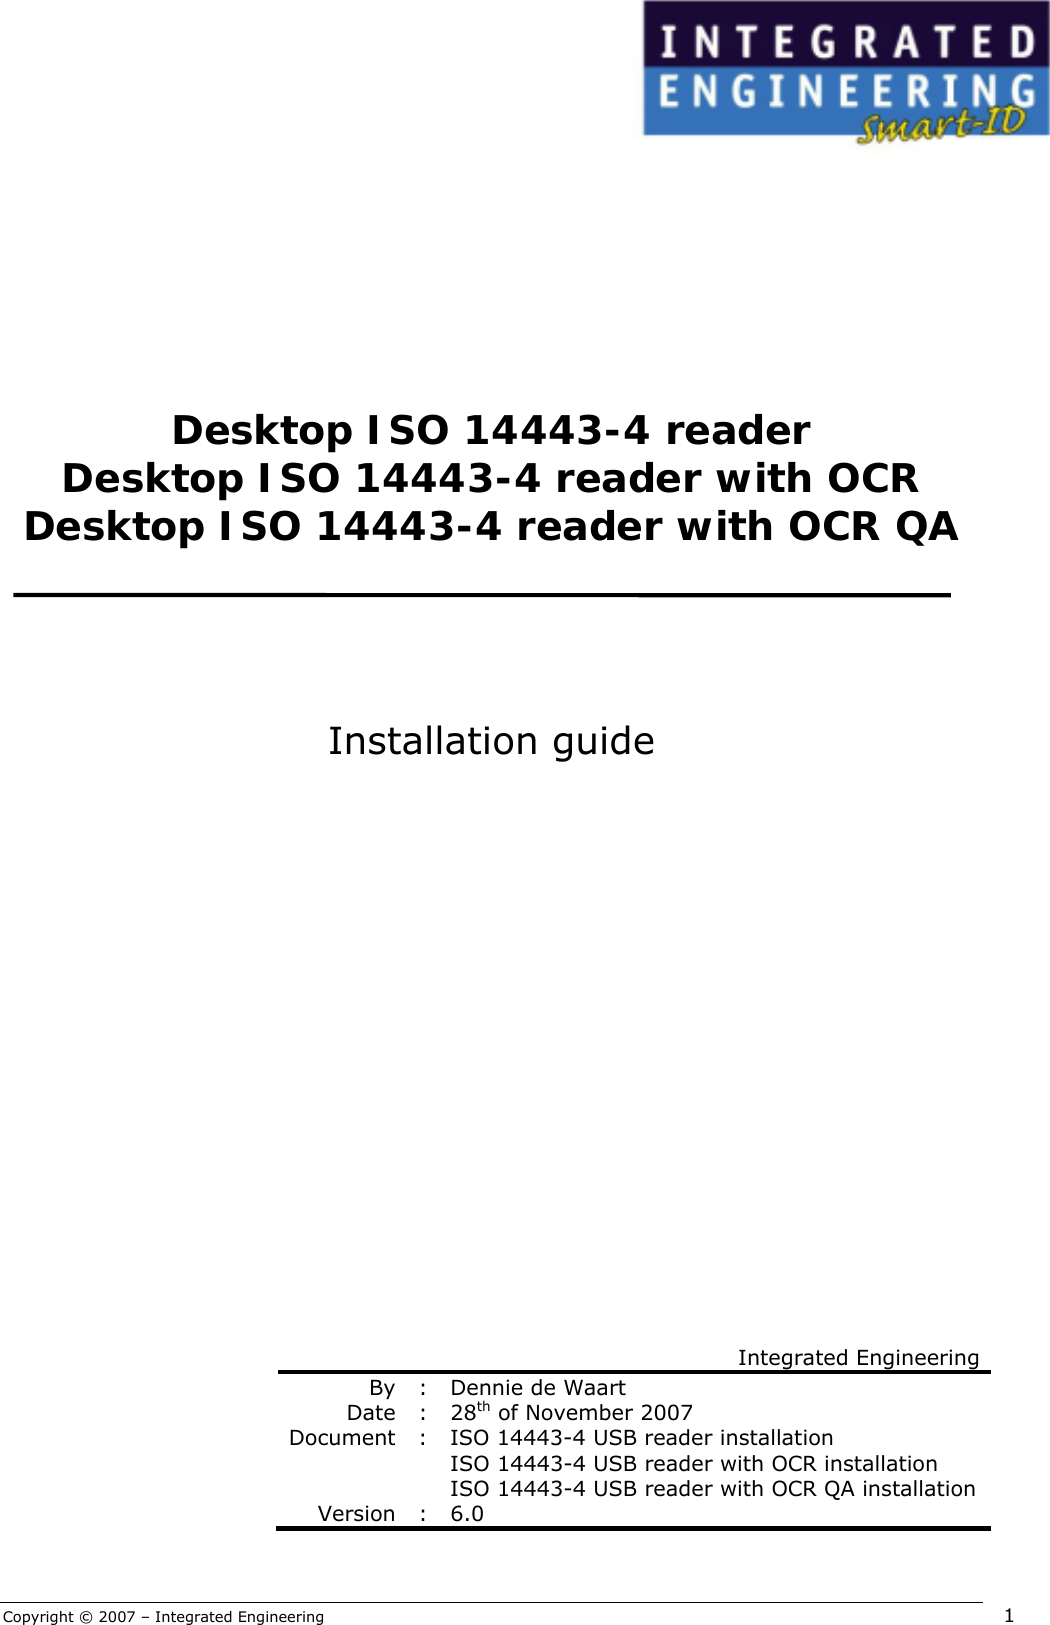 Copyright © 2007 – Integrated Engineering   1              Desktop ISO 14443-4 reader Desktop ISO 14443-4 reader with OCR Desktop ISO 14443-4 reader with OCR QA      Installation guide                        Integrated Engineering By : Dennie de Waart Date : 28th of November 2007  Document  :  ISO 14443-4 USB reader installation ISO 14443-4 USB reader with OCR installation ISO 14443-4 USB reader with OCR QA installation Version : 6.0   